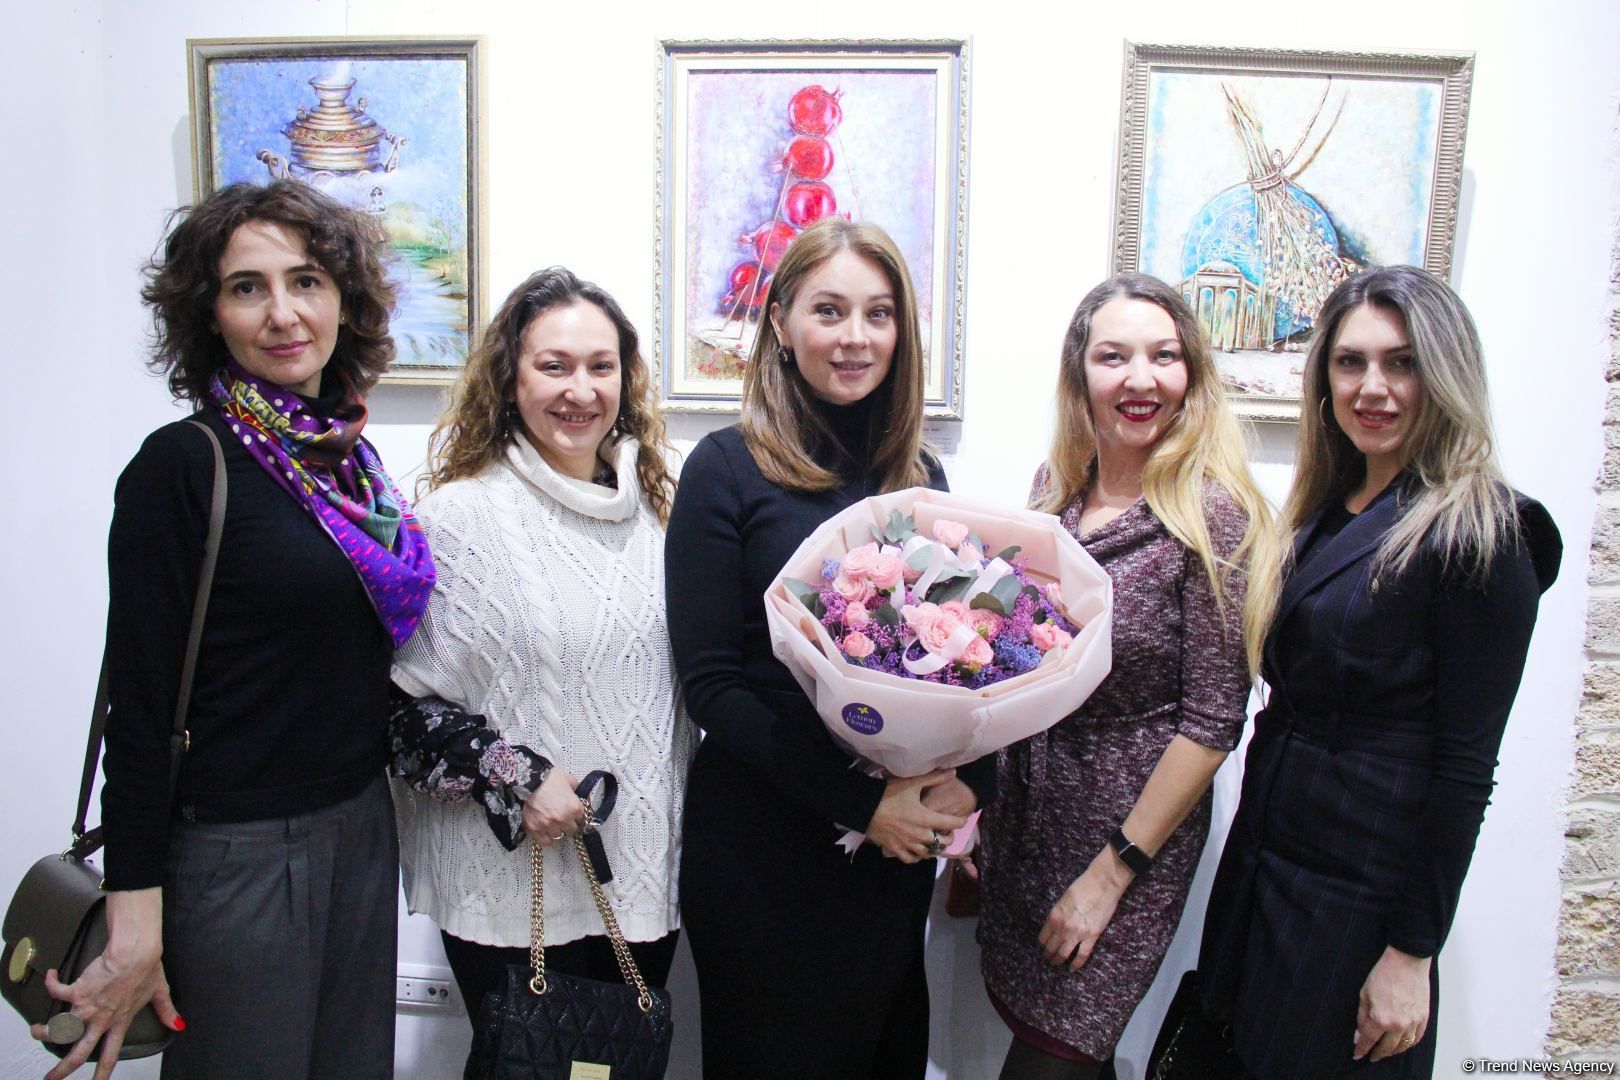 Ukrainian artist critic presents her artworks in Baku [PHOTO]